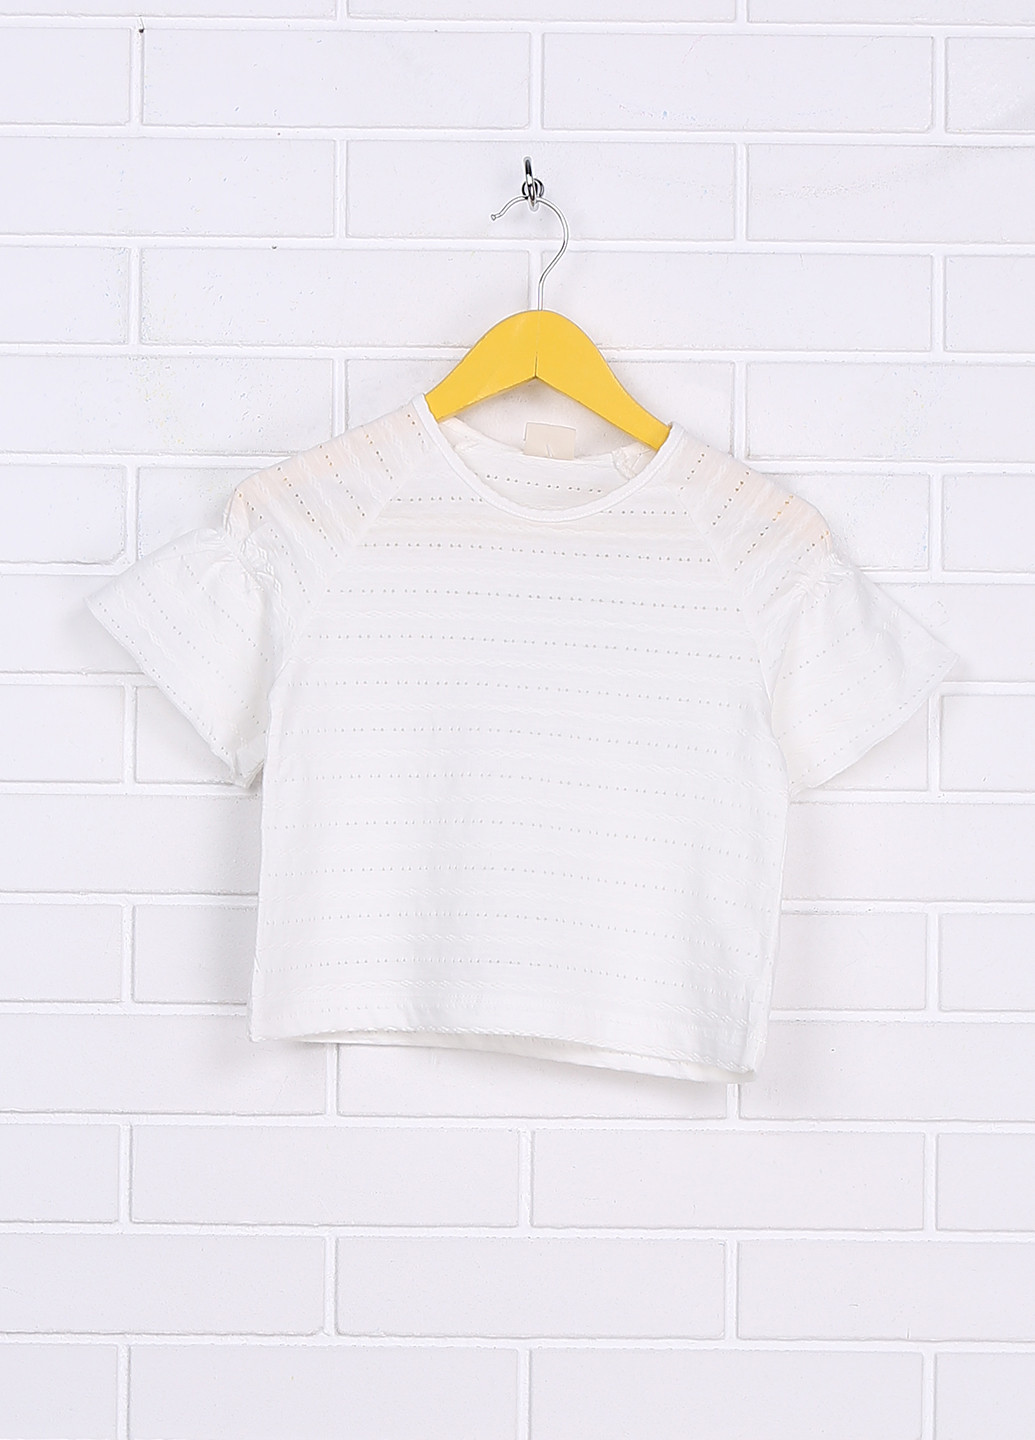 Молочная однотонная блузка с коротким рукавом Brand летняя